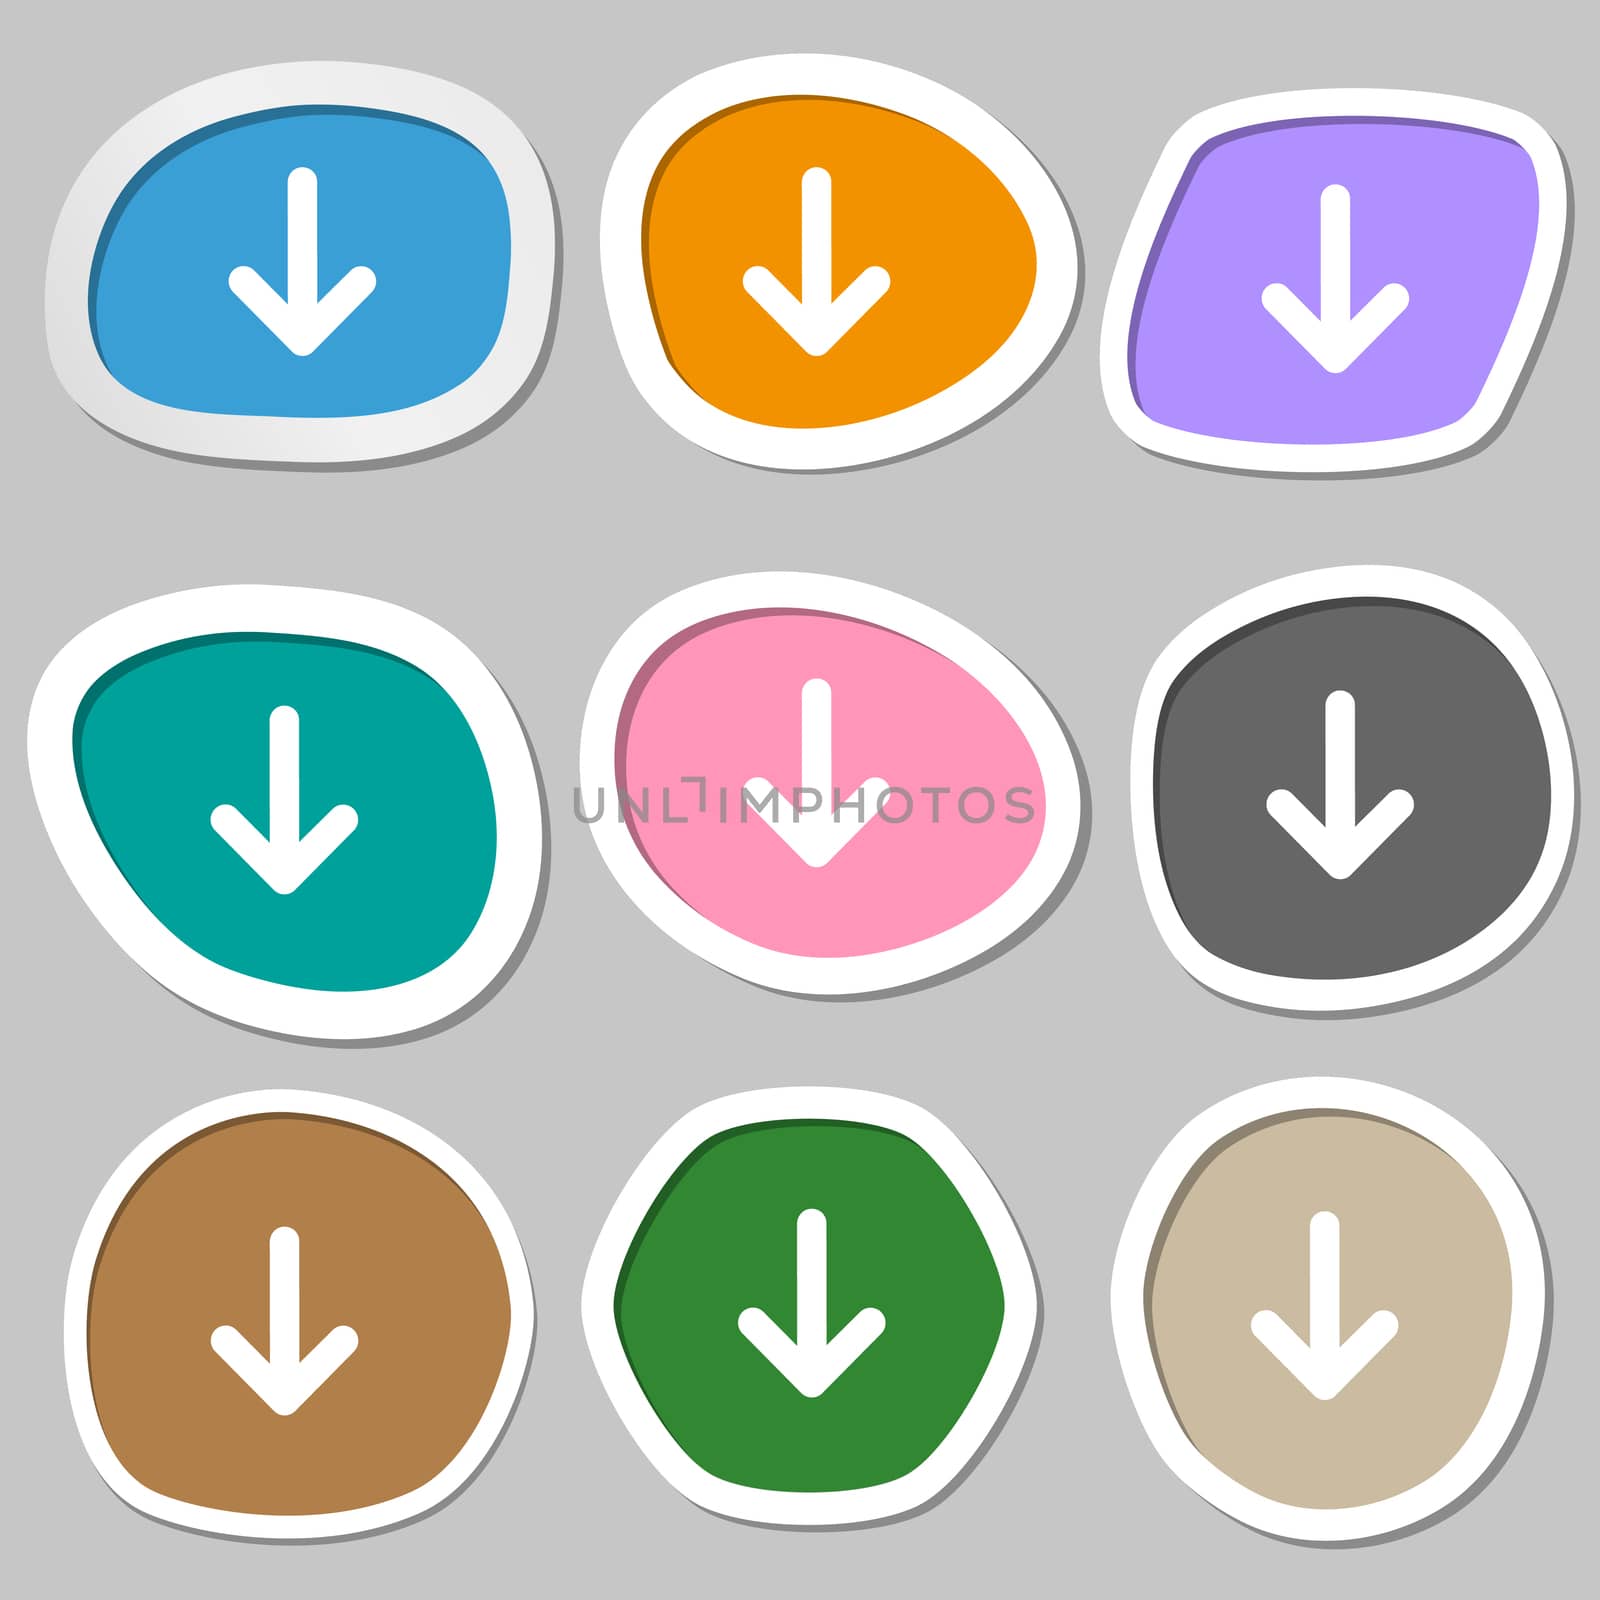 Arrow down, Download, Load, Backup icon symbols. Multicolored paper stickers. illustration